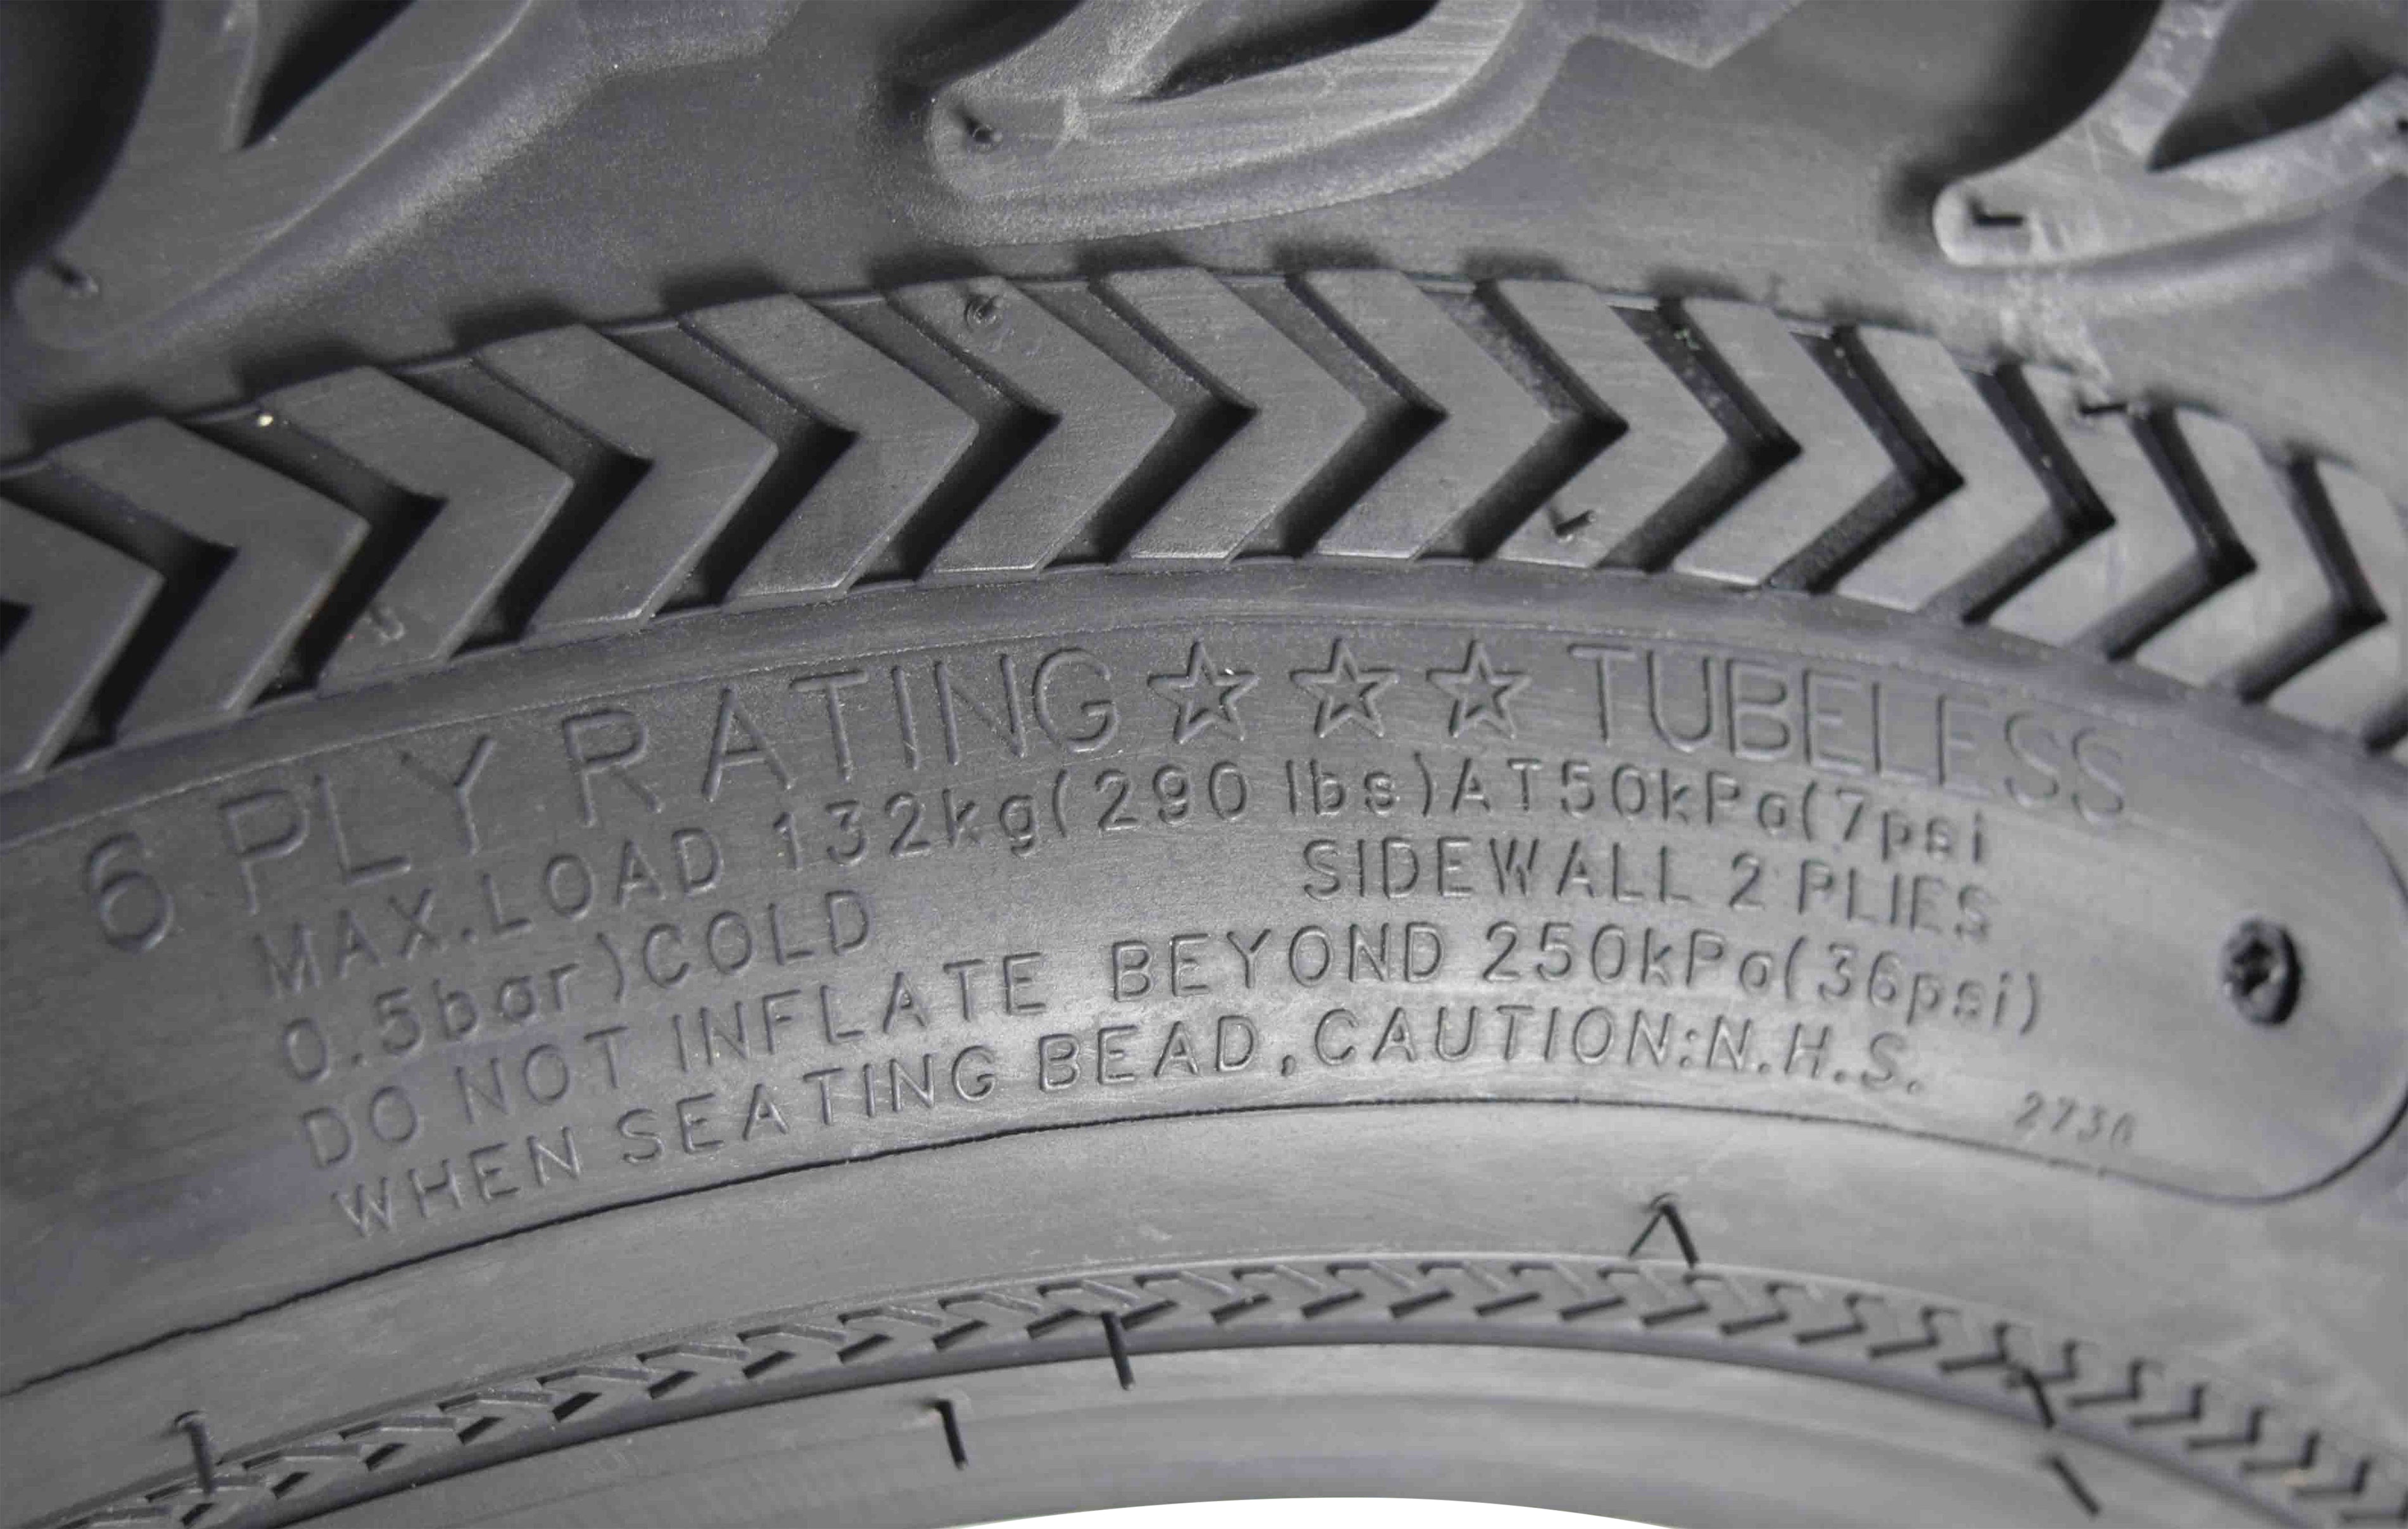 Kenda Bear Claw EX 23x8-11 F 23x10-10 R ATV Tires 6 PLY (4 Pack)